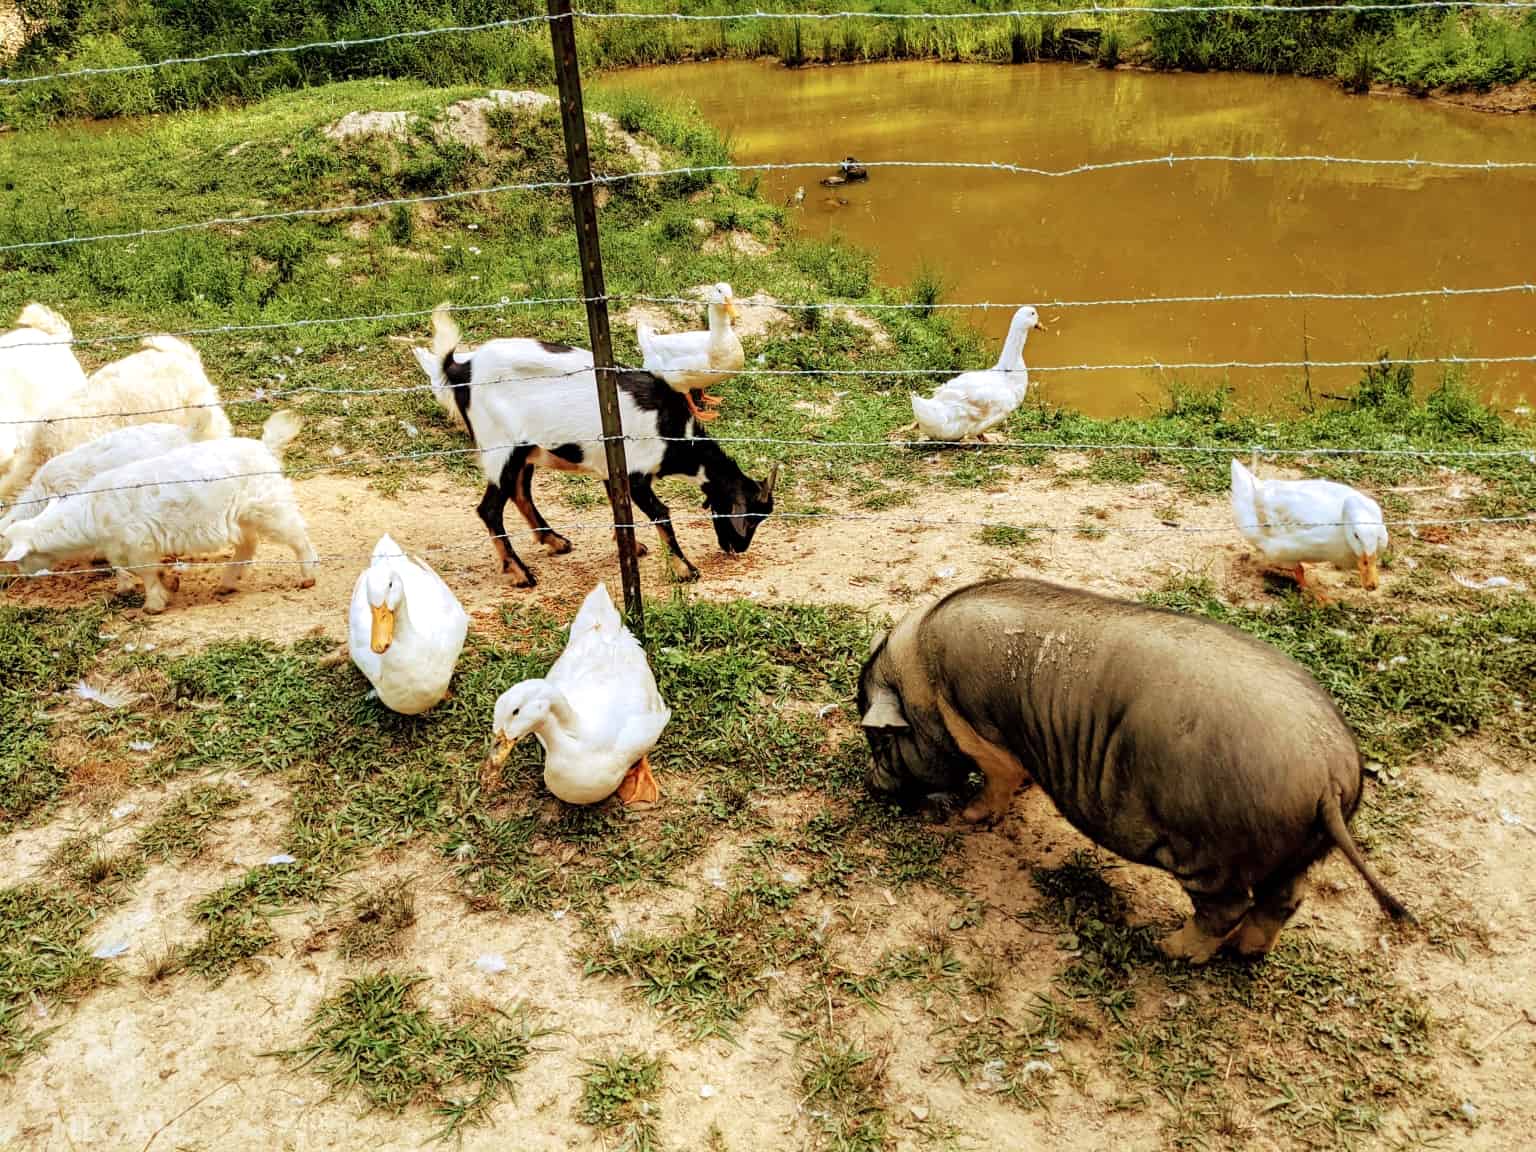 ducks, goat and pig near pond